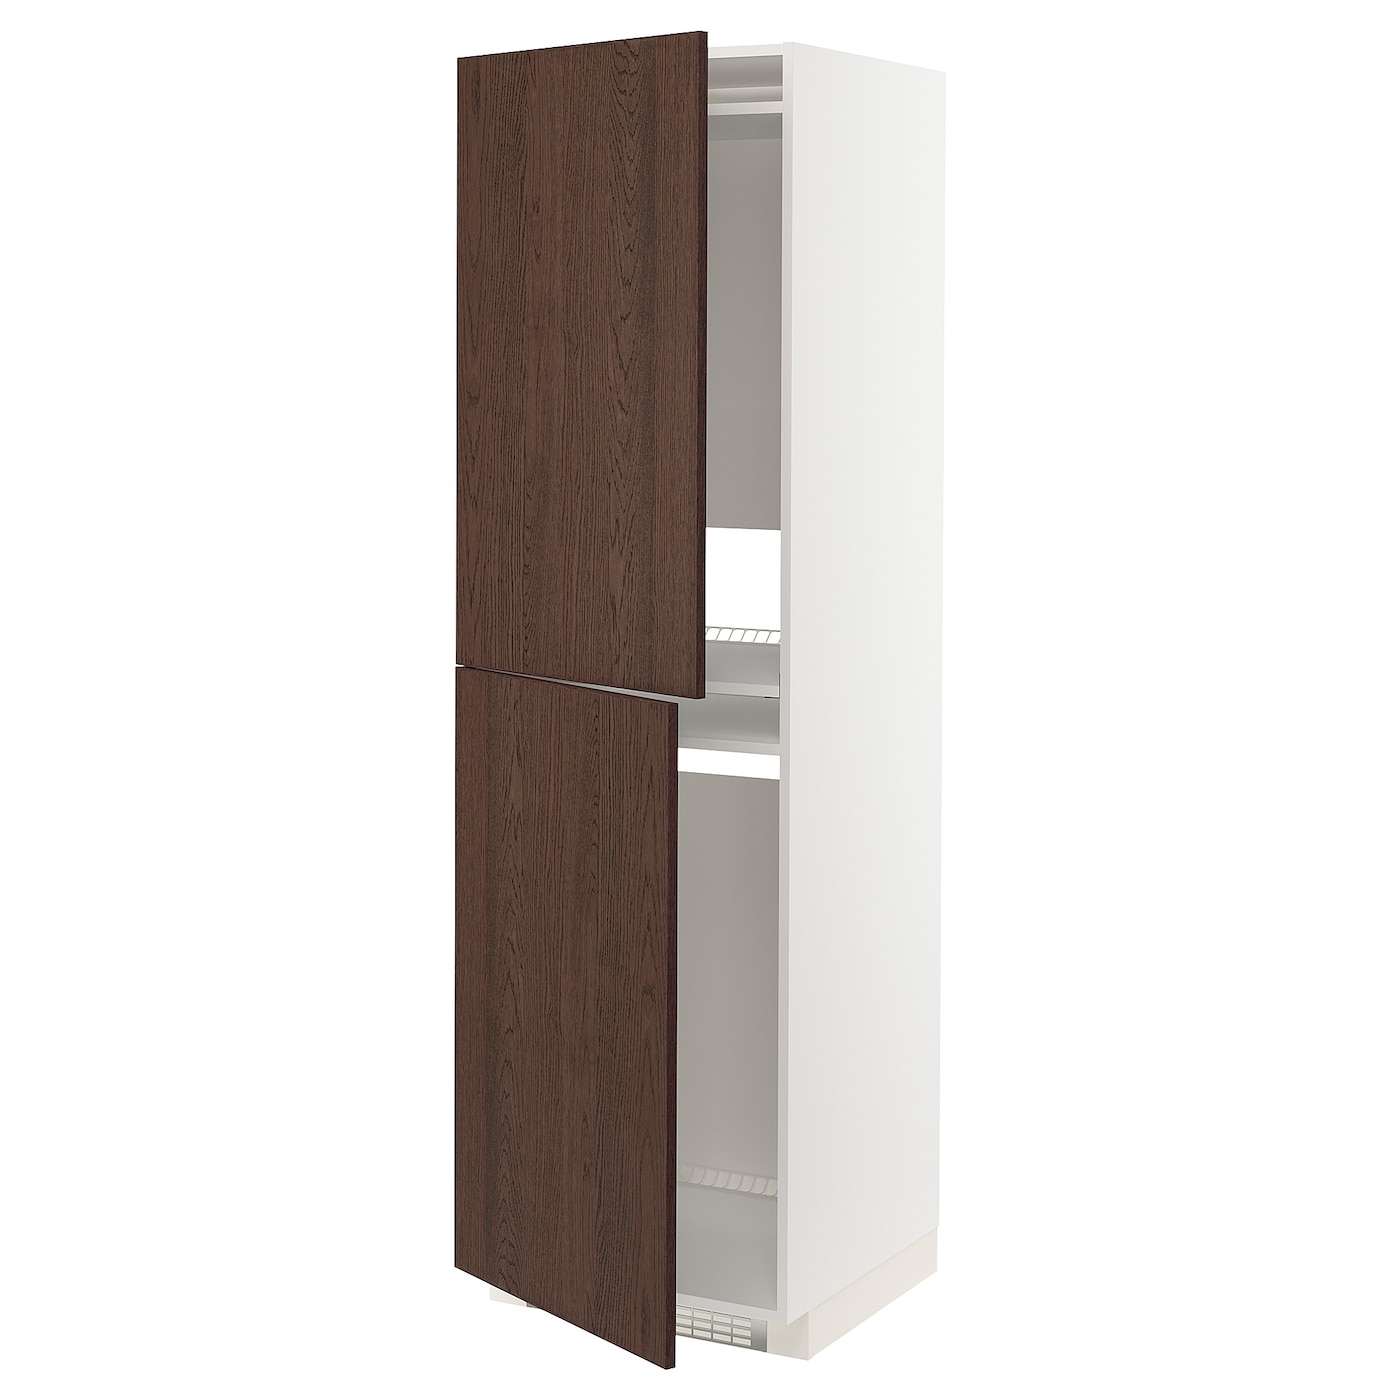 Высокий кухонный шкаф - IKEA METOD/МЕТОД ИКЕА, 200х60х60 см, белый/коричневый